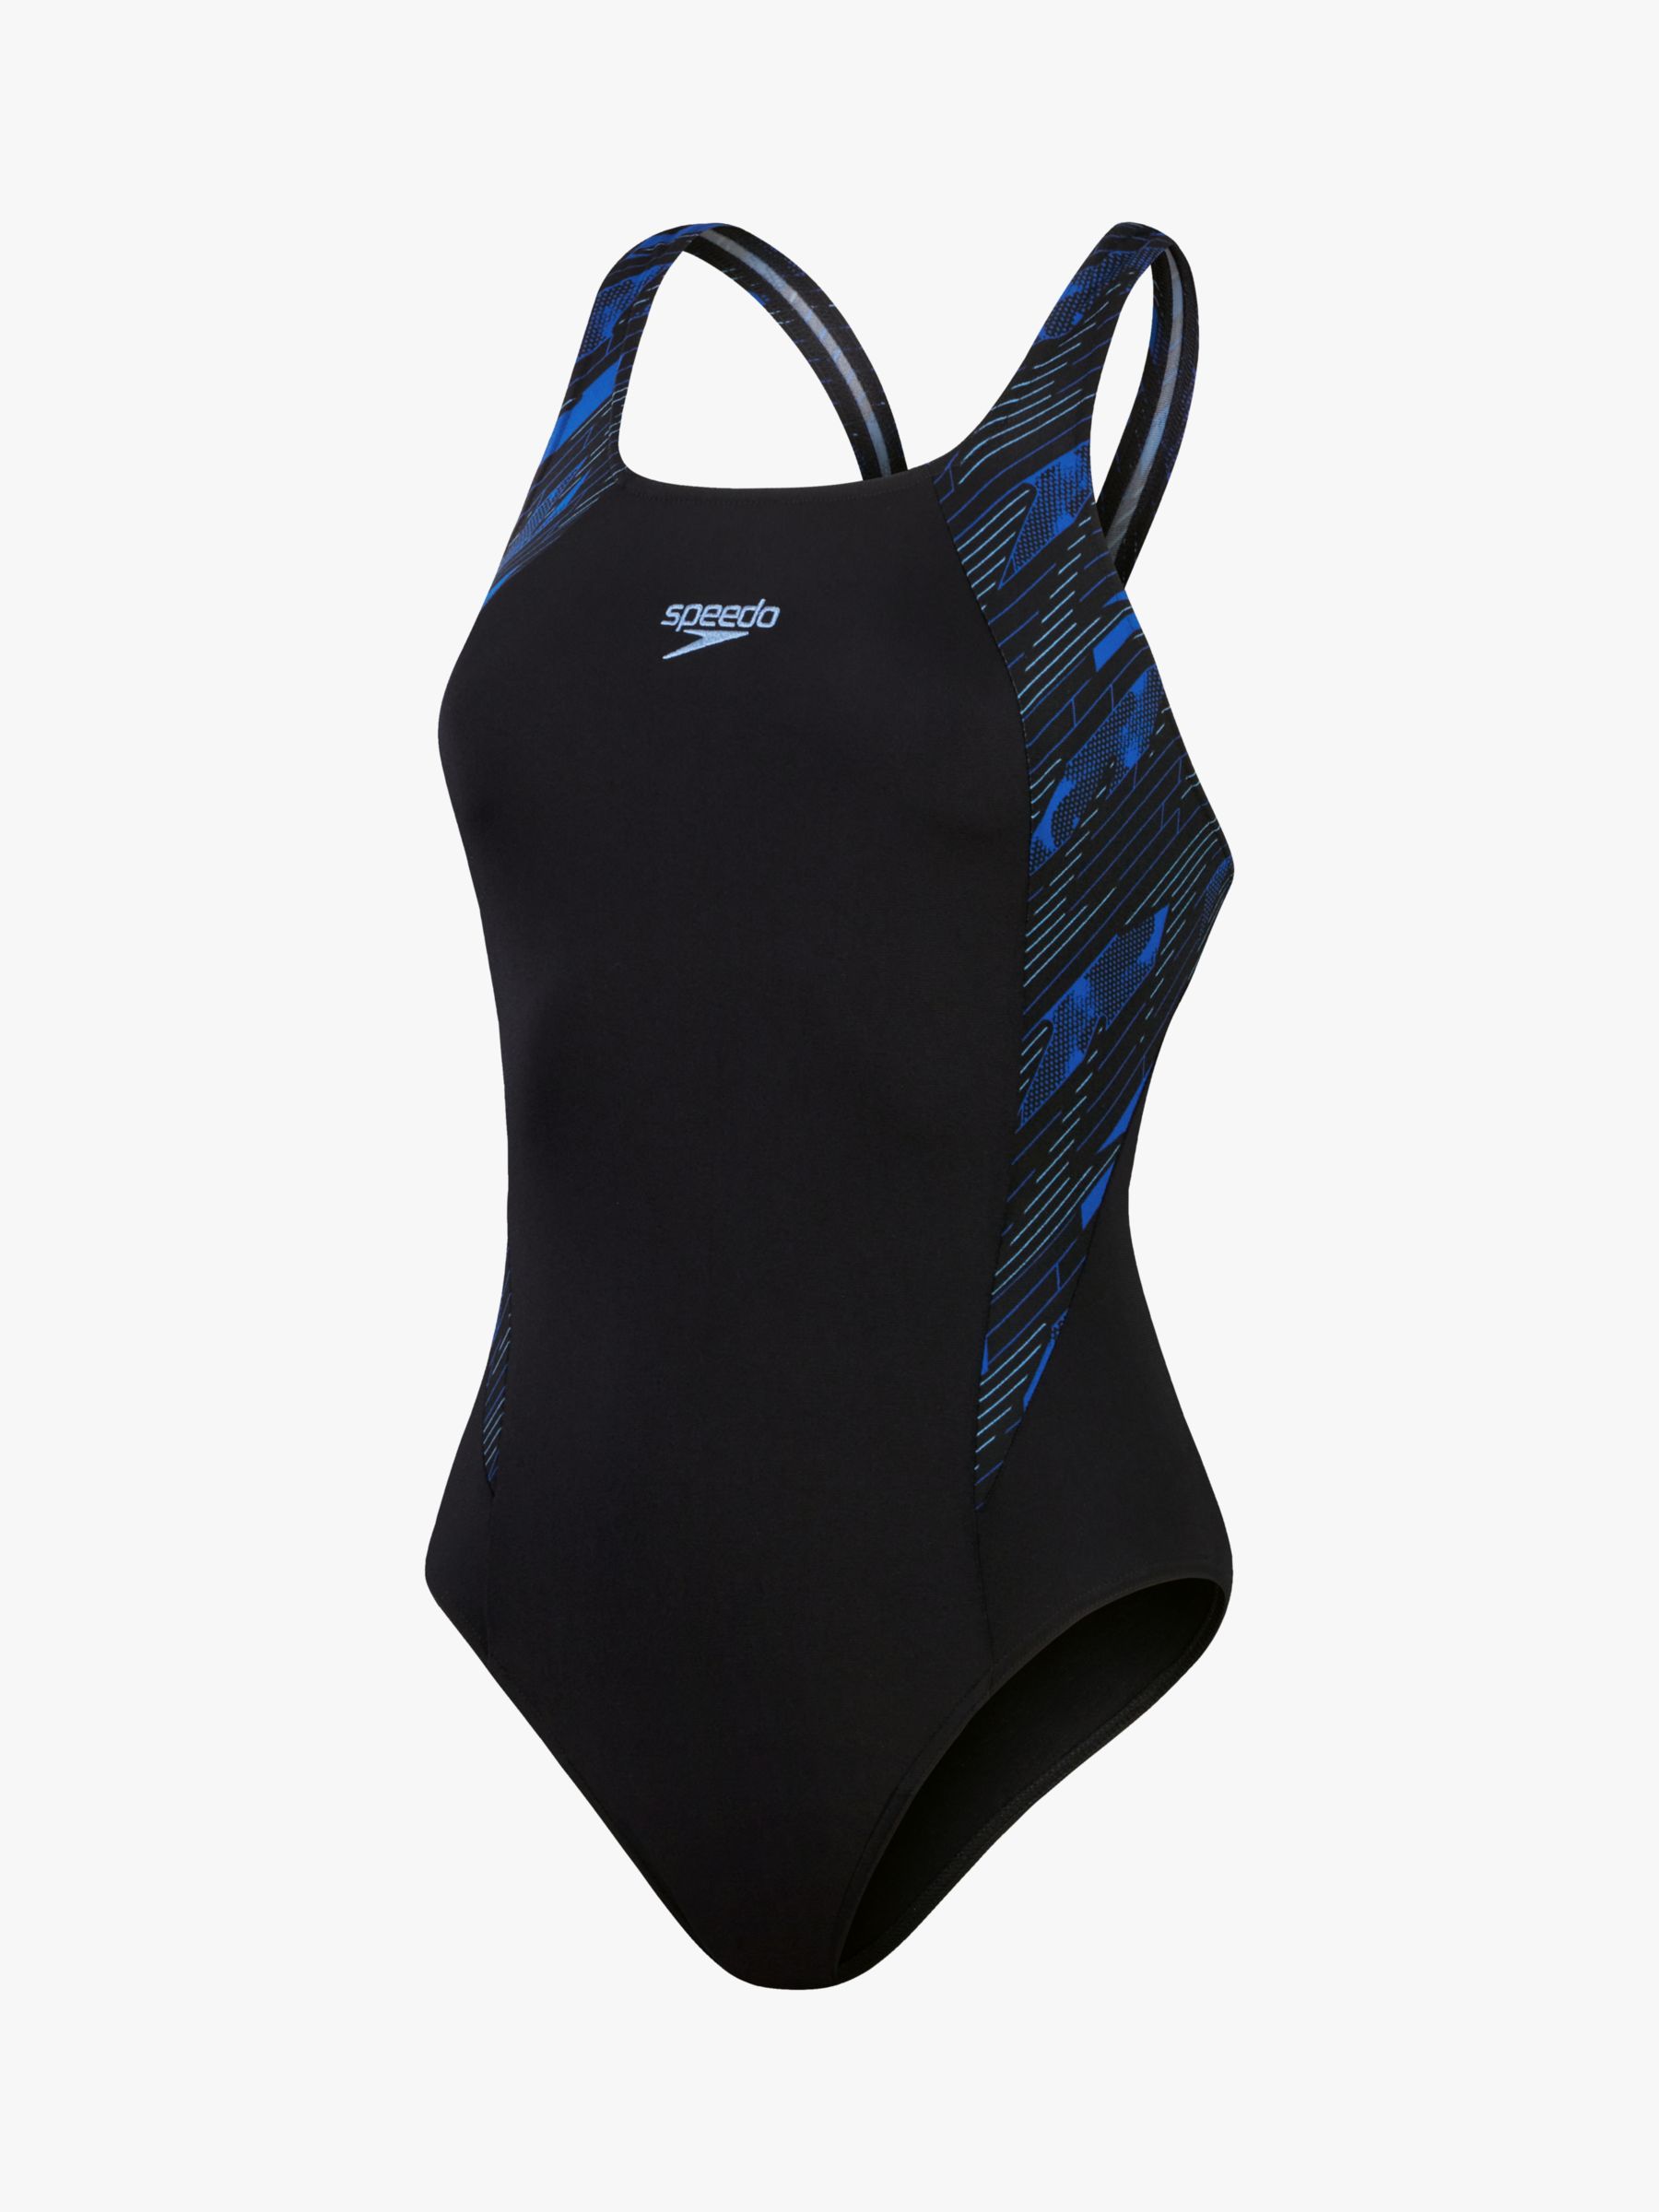 Speedo Women's HyperBoom Splice Muscleback Swimsuit, Black / Cobalt, 40